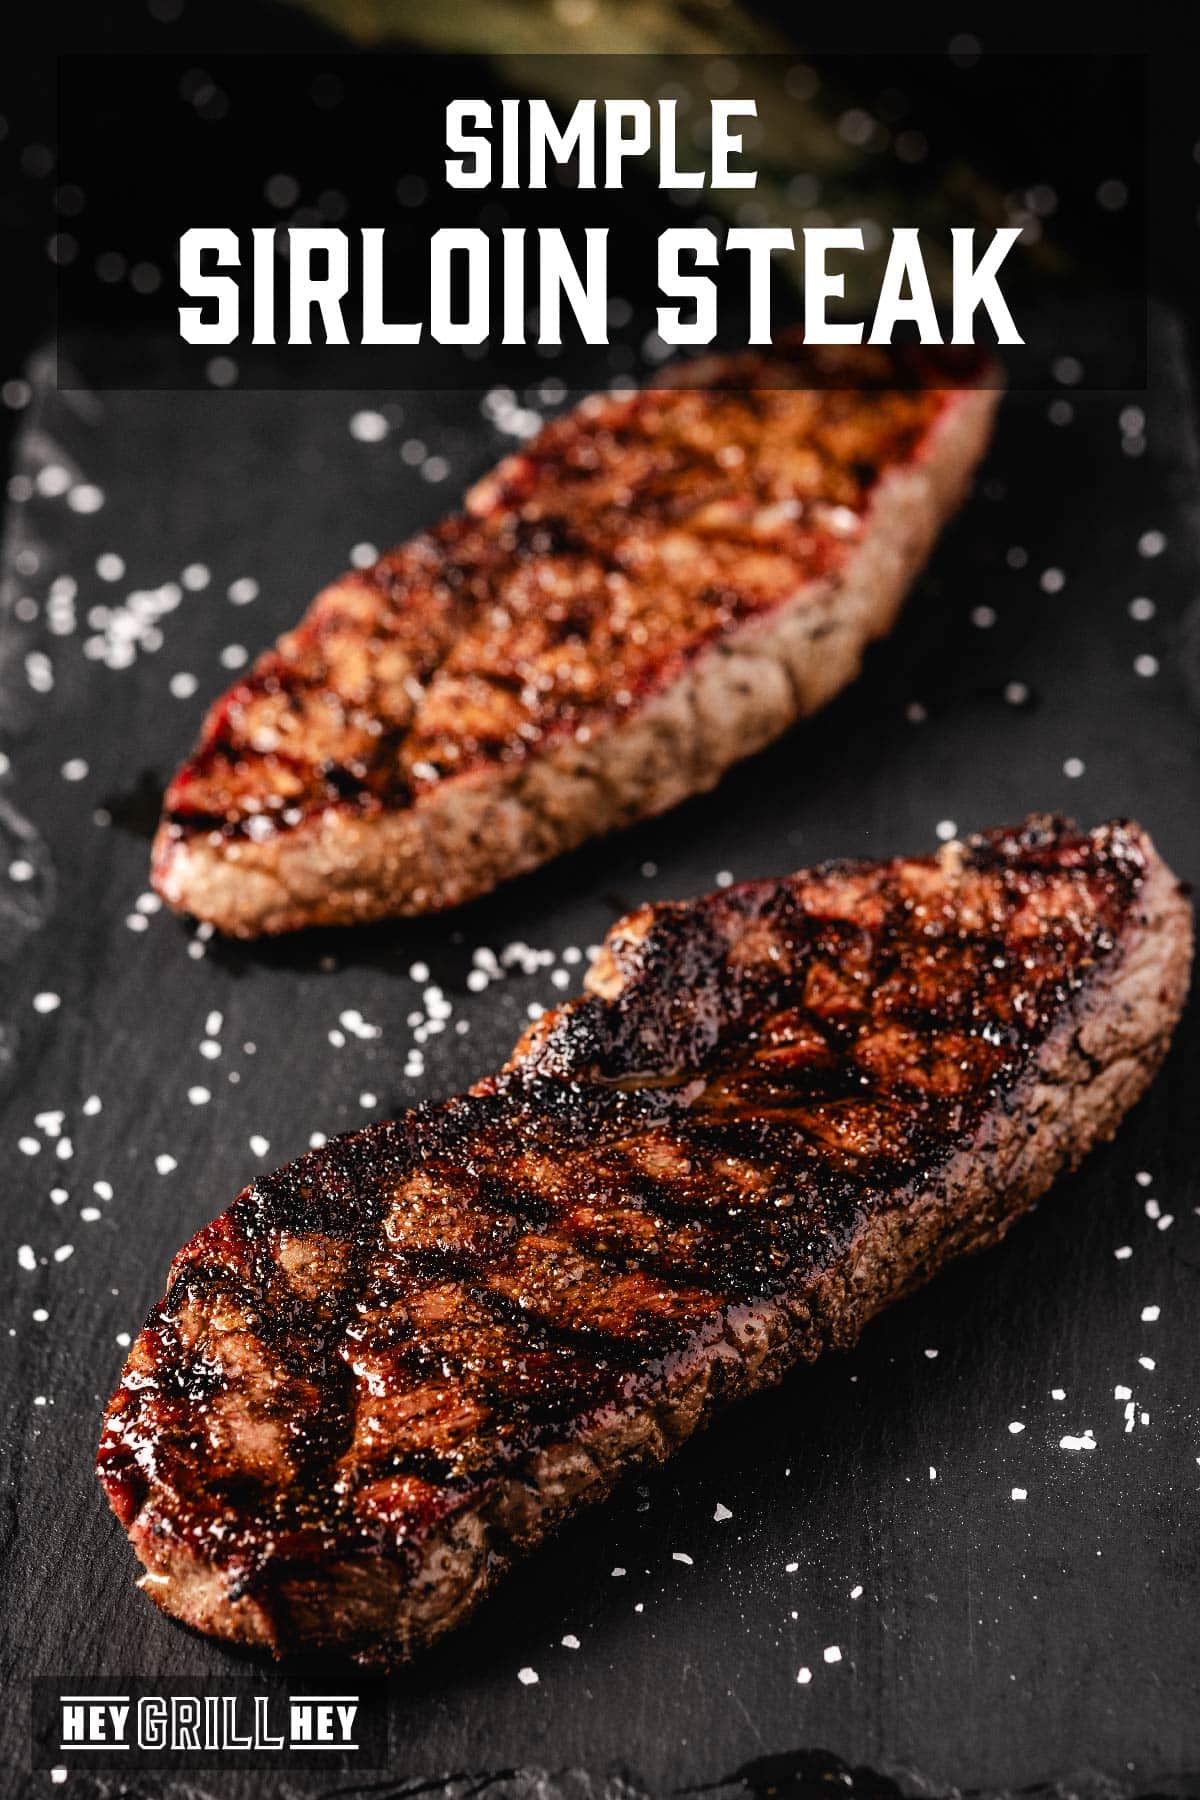 Sirloin steaks on black serving platter sprinkled with salt. Text reads "Simple Sirloin Steak".